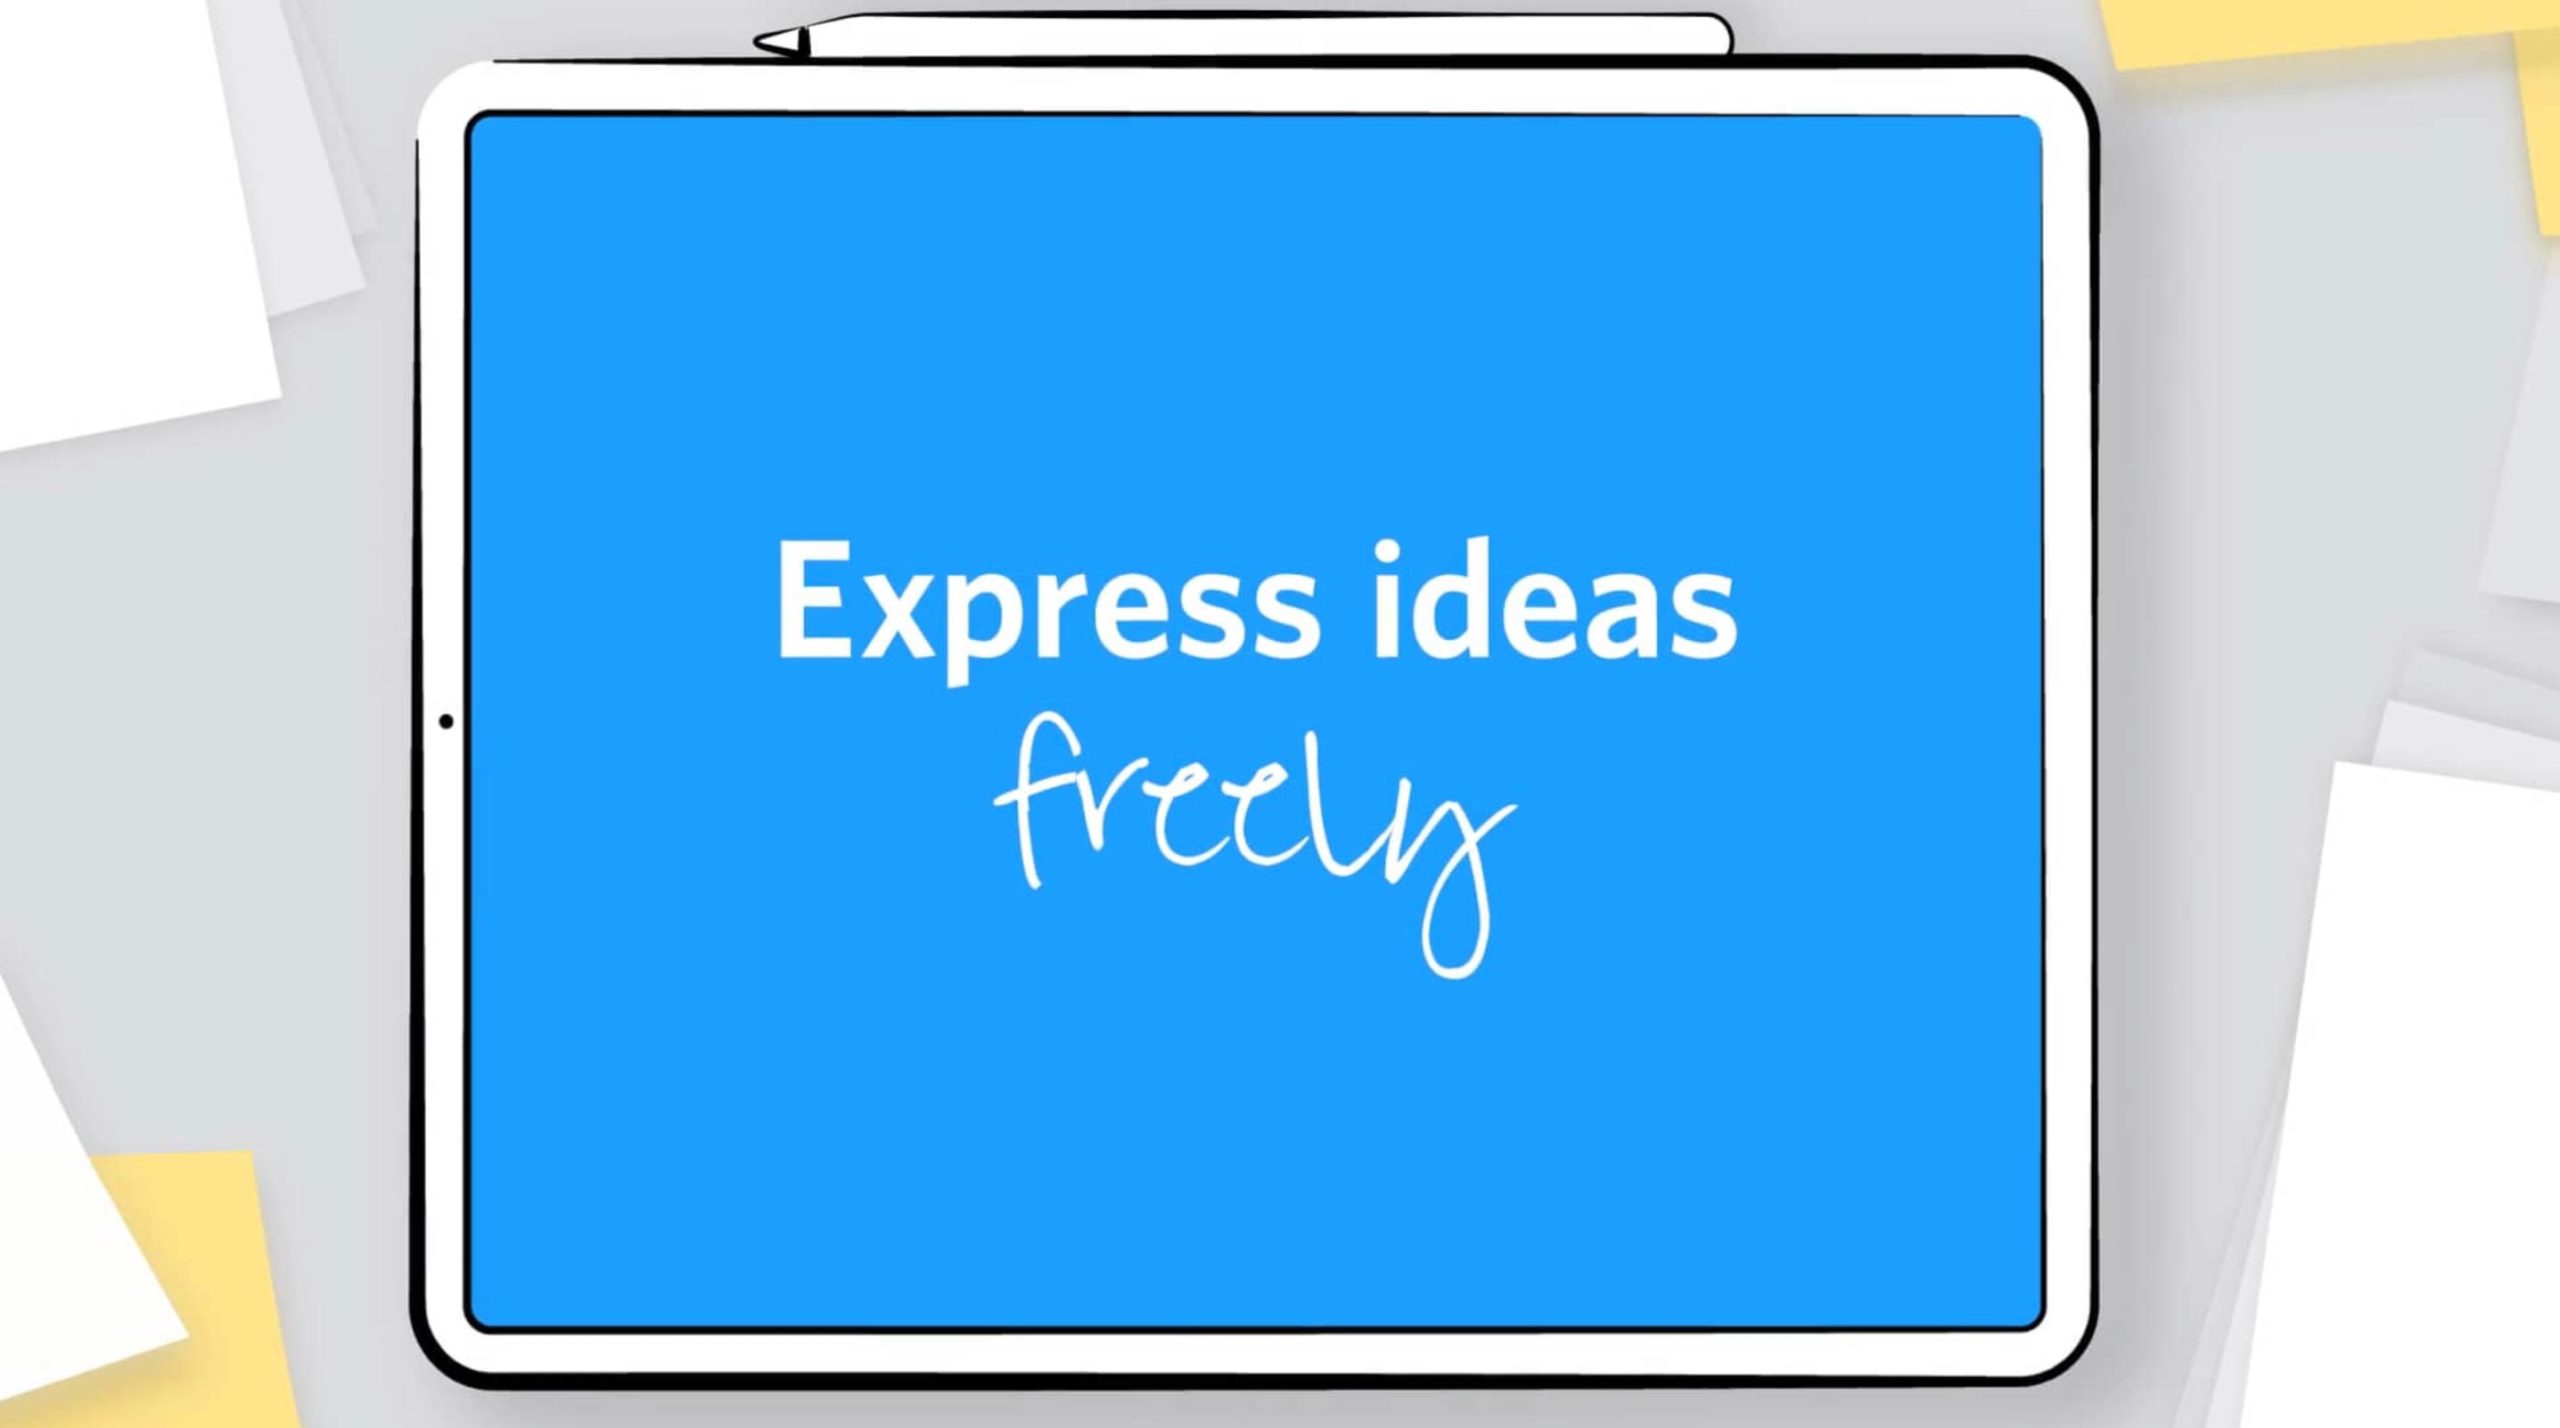 Express ideas freely